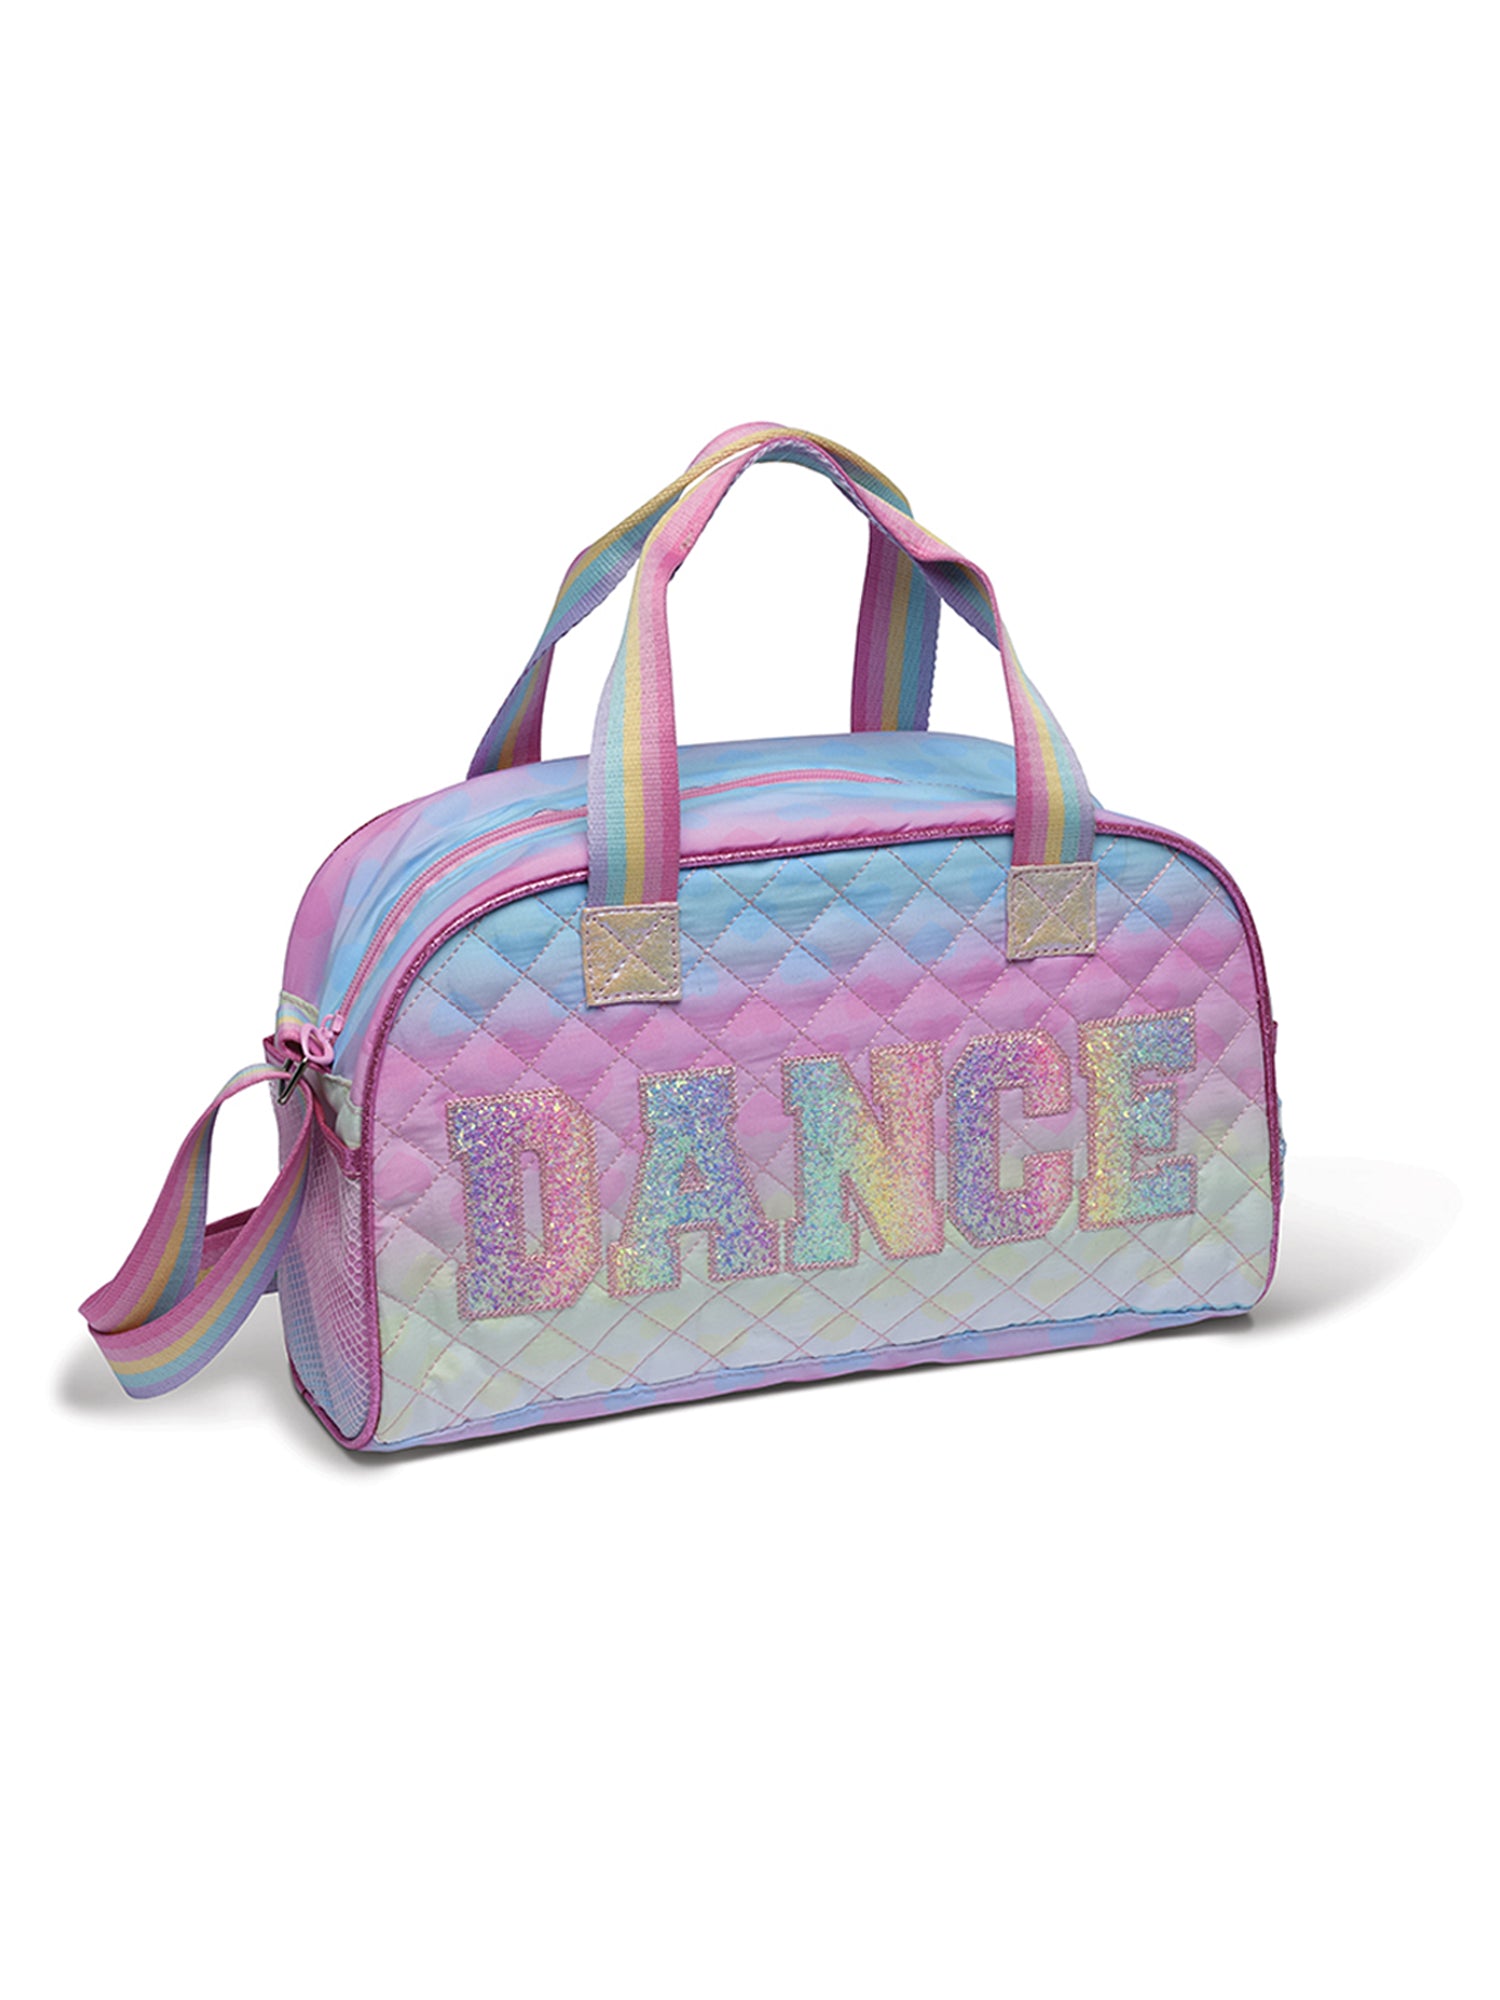 Dance' Quilted Metallic Medium Duffle Bag